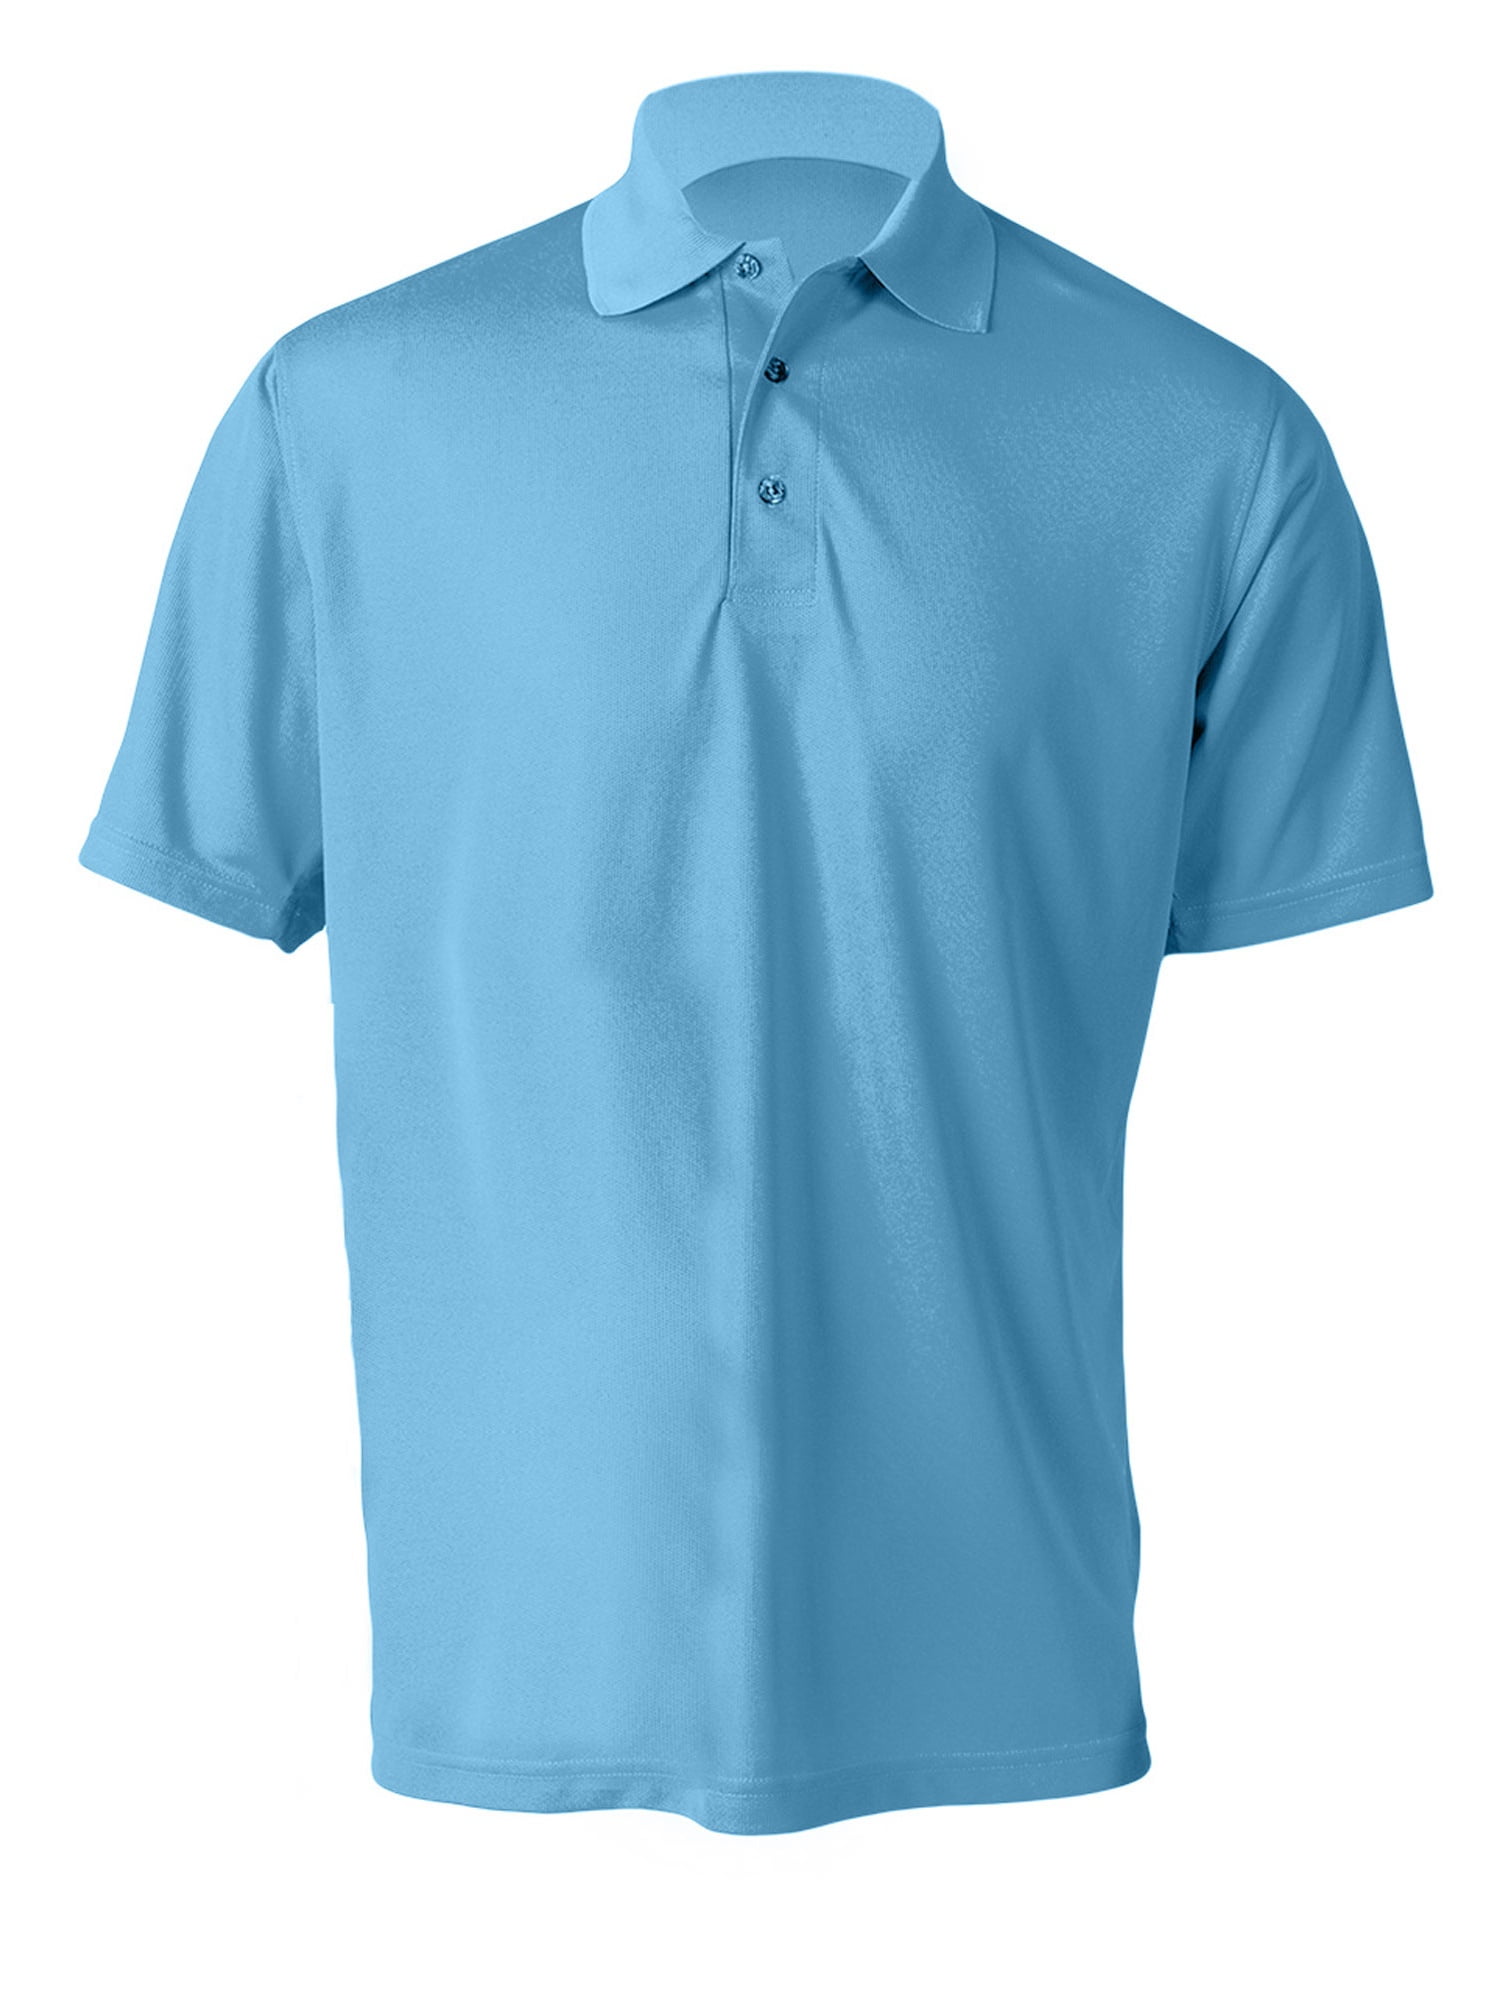 30 Men\'s Protection Shirt, Upf 100 Style Polo Anti Microbial Paragon